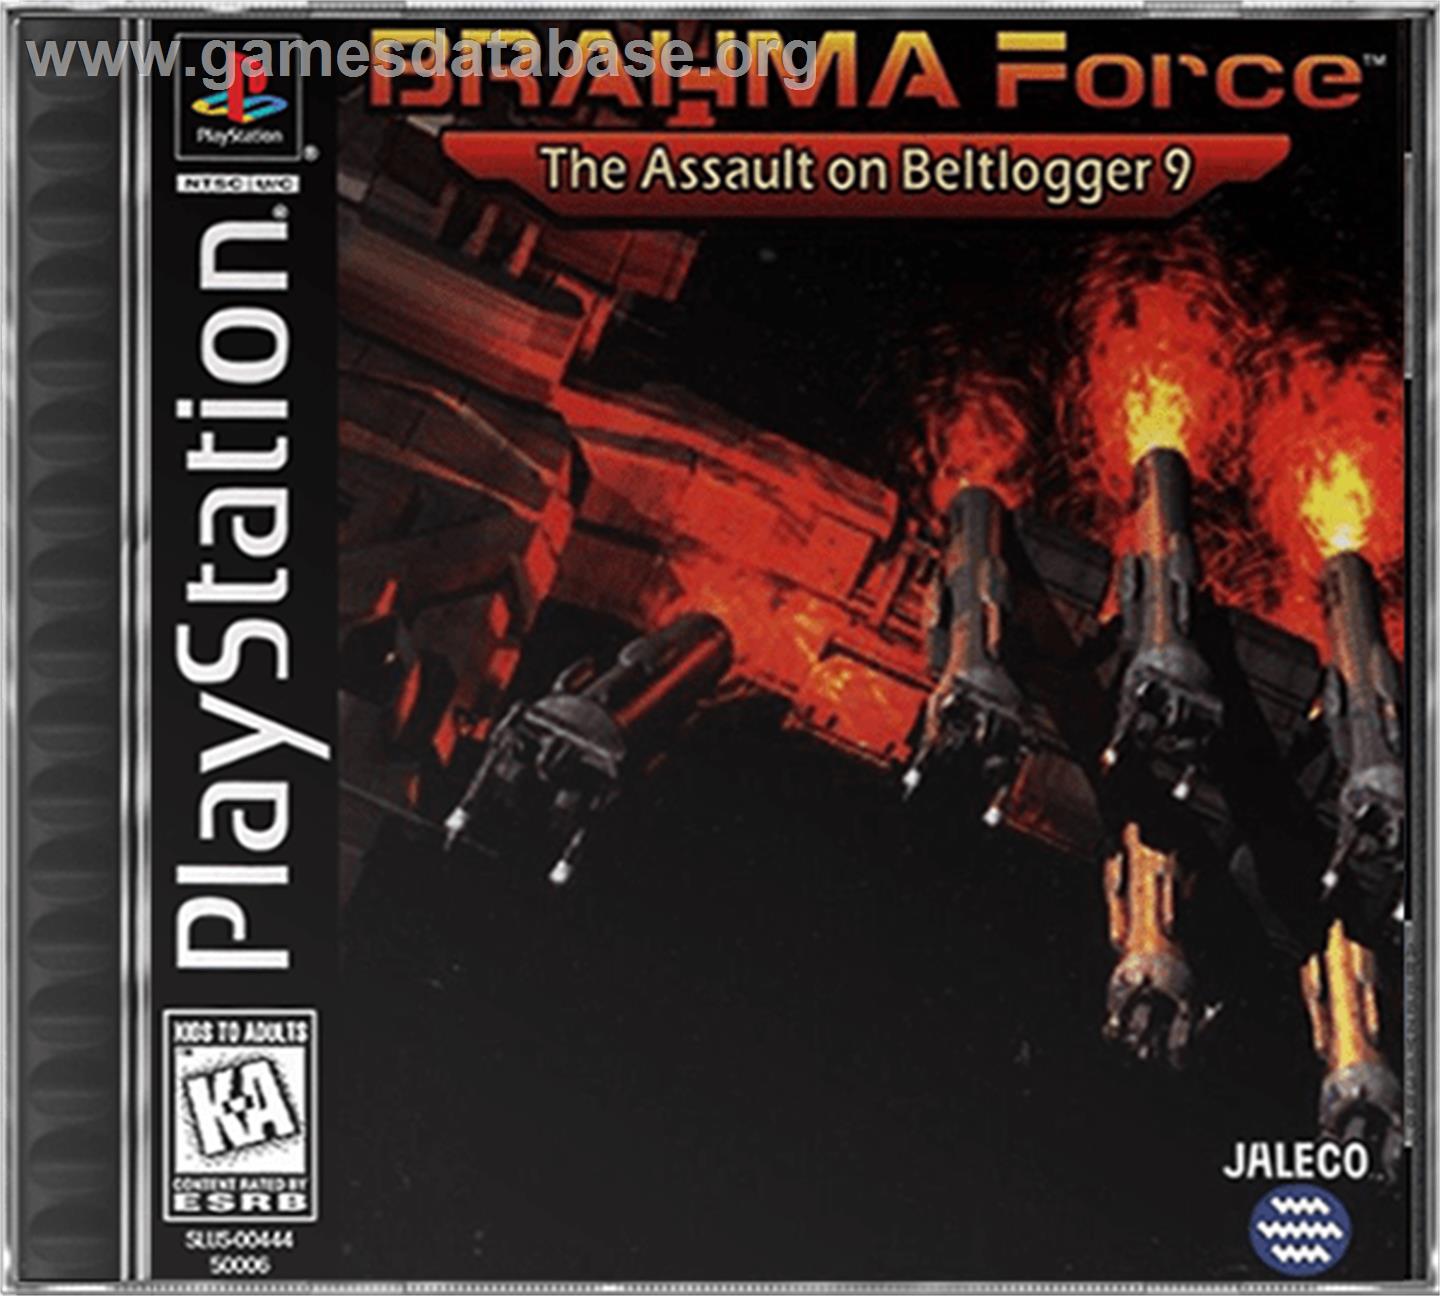 BRAHMA Force: The Assault on Beltlogger 9 - Sony Playstation - Artwork - Box